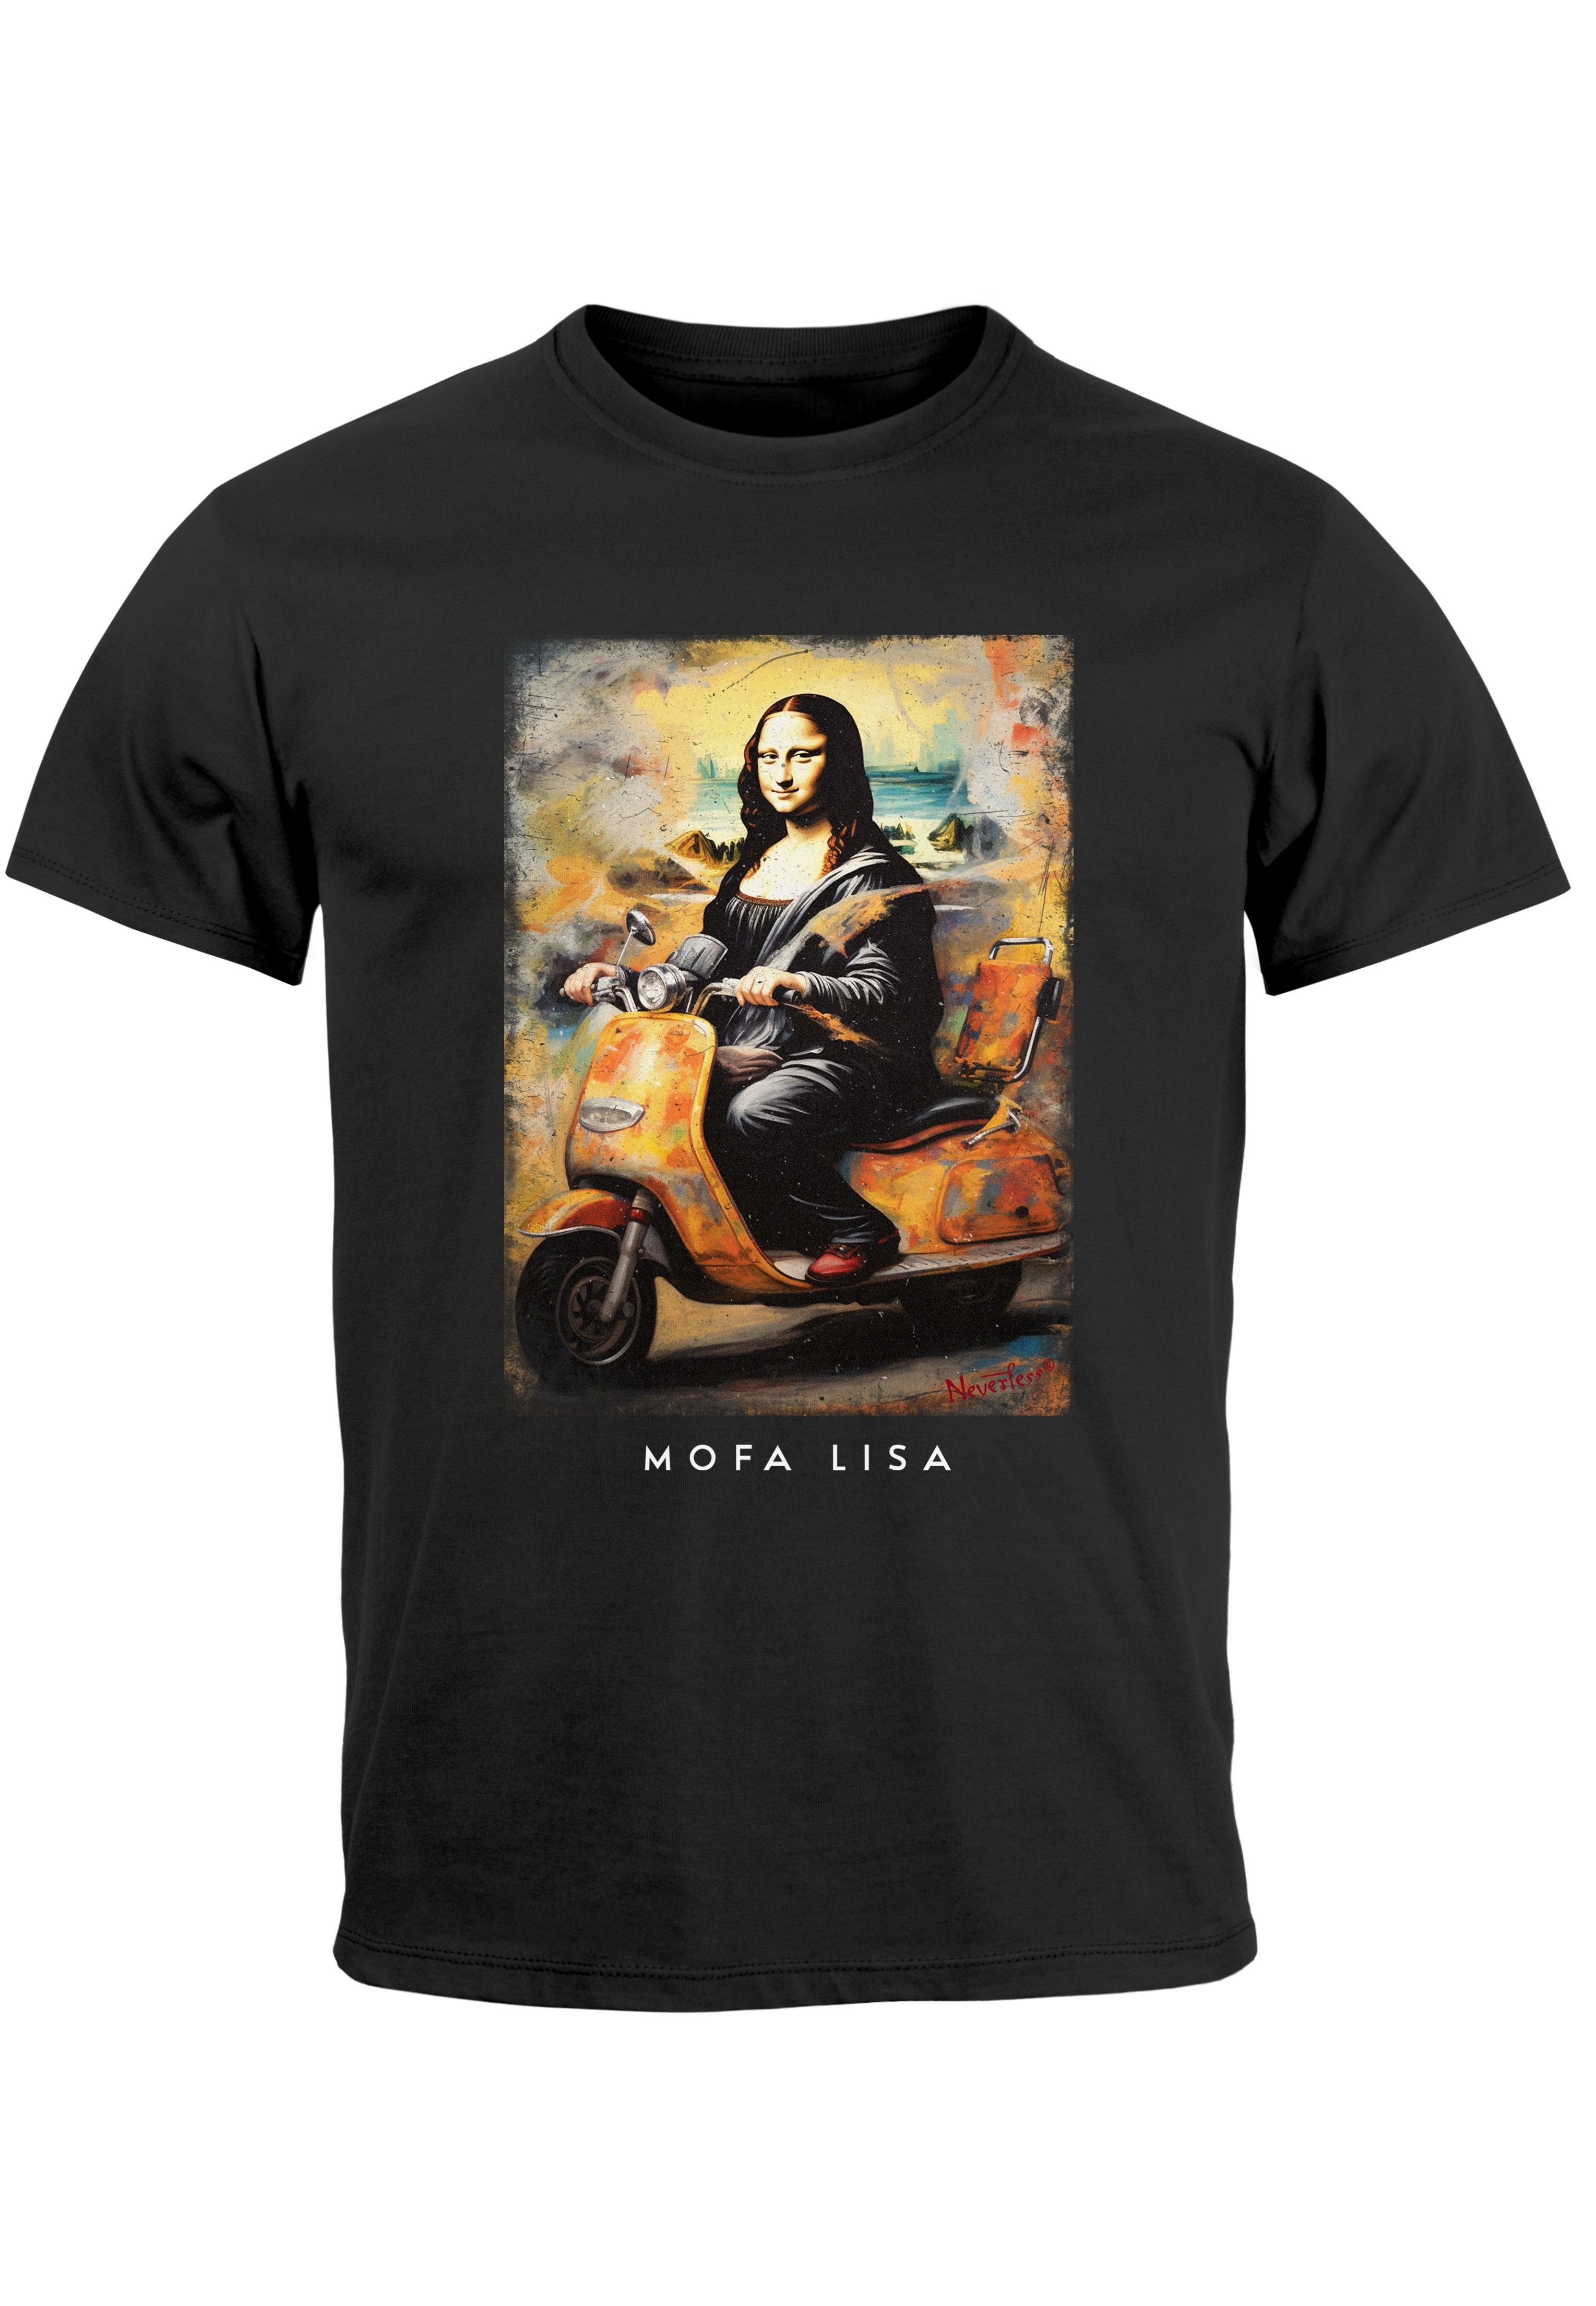 MoonWorks Print-Shirt Herren T-Shirt Print Aufdruck Mona Lisa Parodie Meme Kapuzen-Pullover mit Print Mofa Lisa schwarz